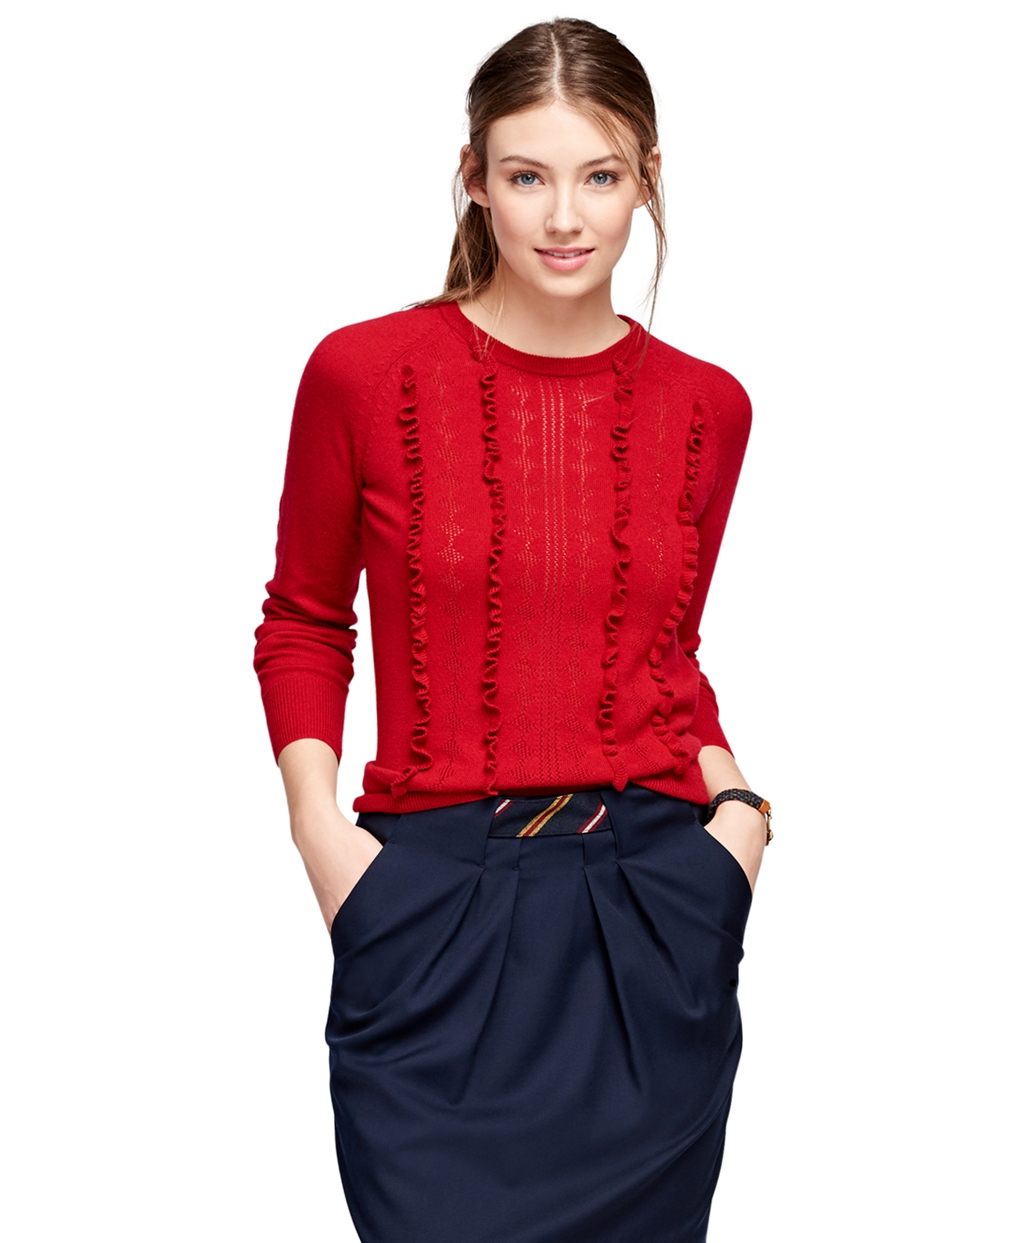 Lyst - Brooks Brothers Merino Wool Ruffle Sweater in Red